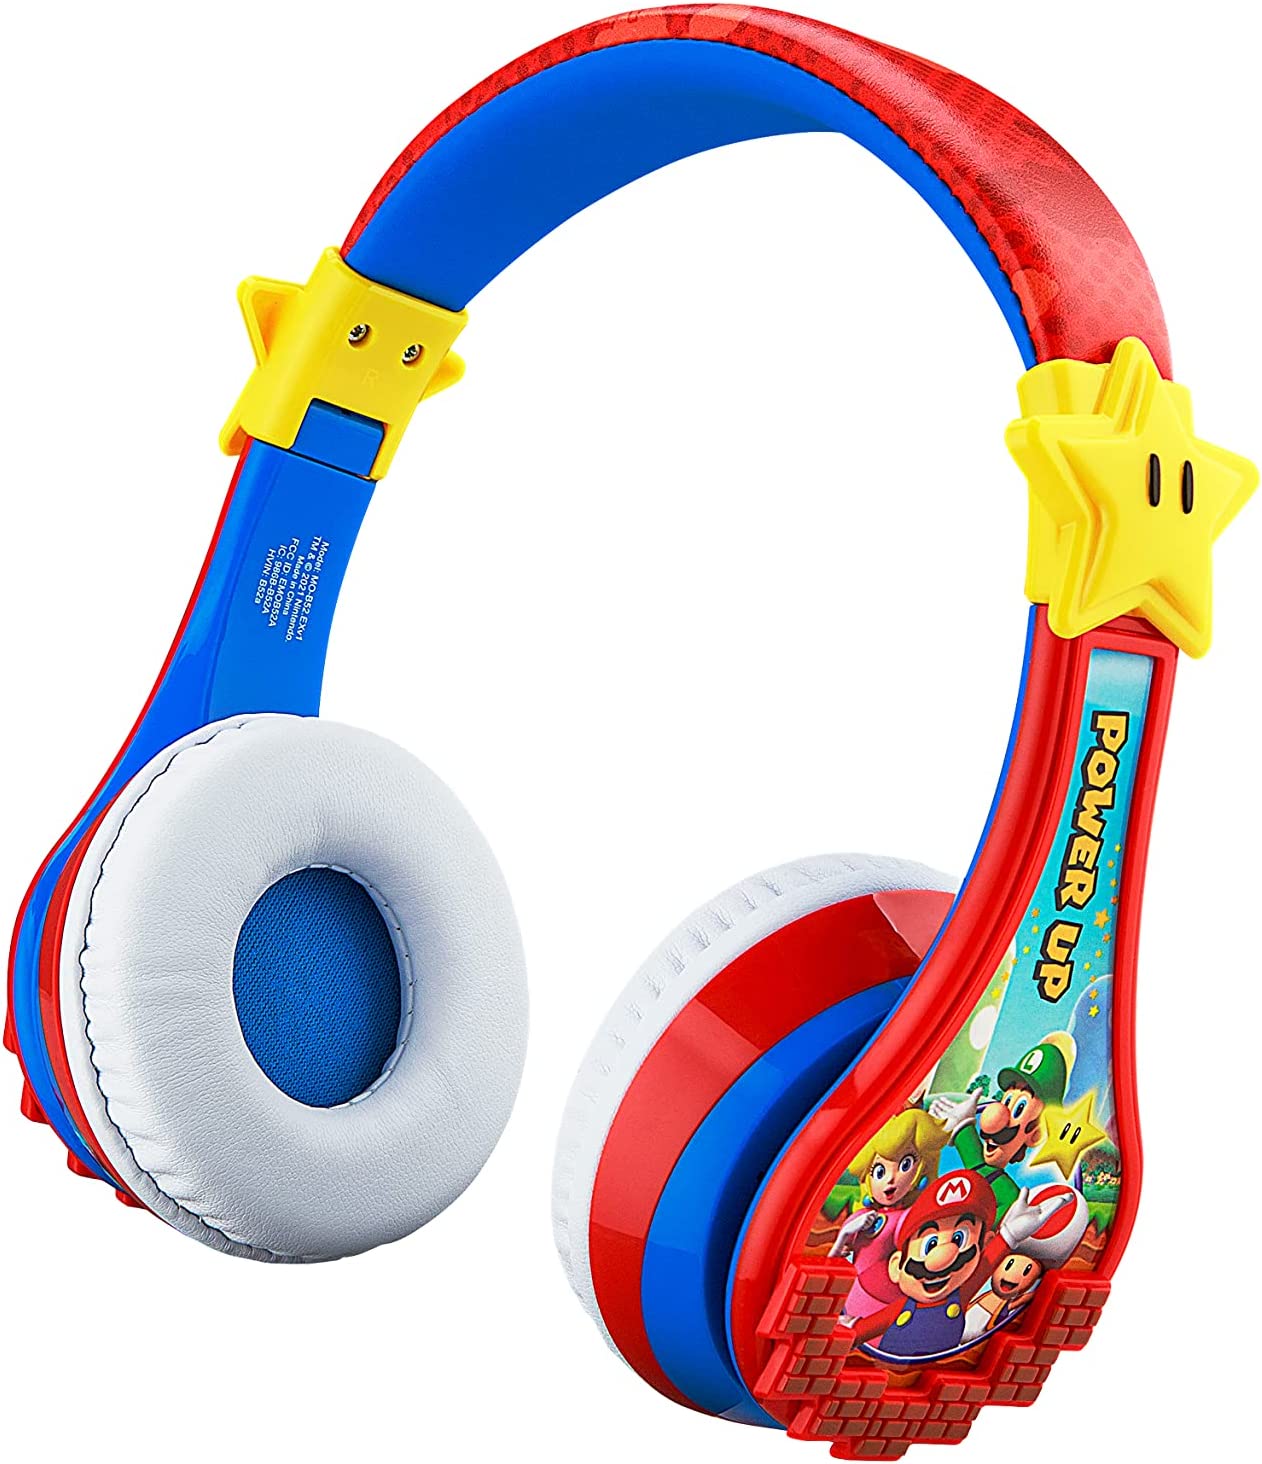 Diadema Auriculares Inalámbricos Para Niños Bluetooth